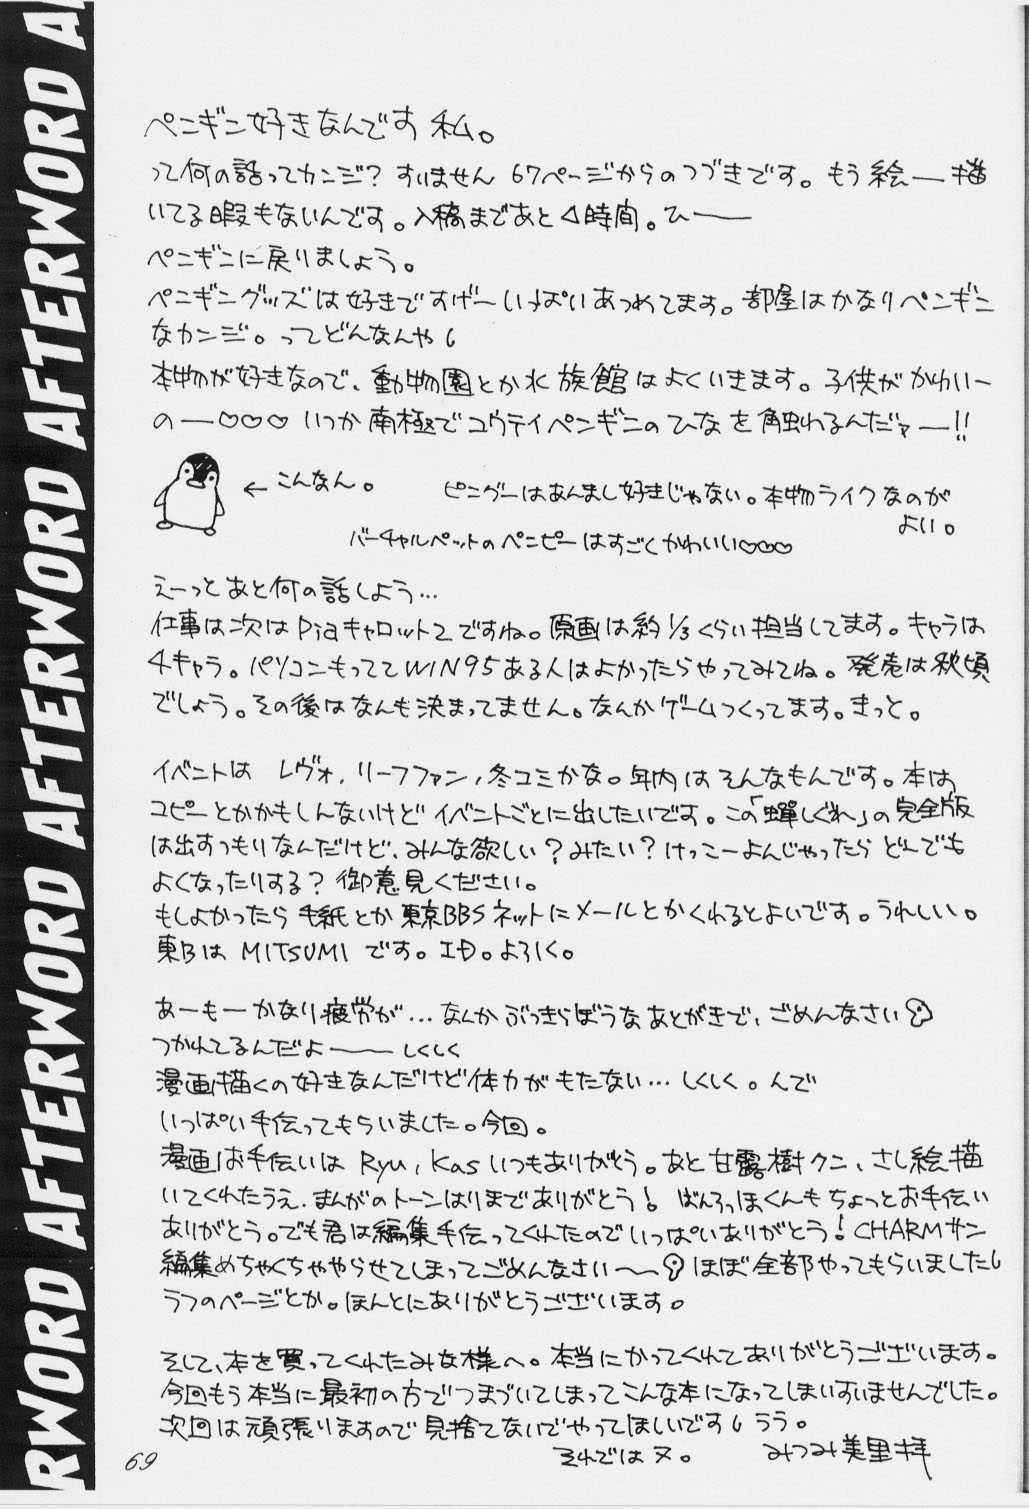 [CUT A DASH!! (Amaduyu Tatsuki, Fujiwara Ryuu, Mitsumi Misato)] Positive Penguin Life [CUT A DASH!! (甘露樹, 藤原竜, みつみ美里)] POSITIVE PENGUIN LIFE